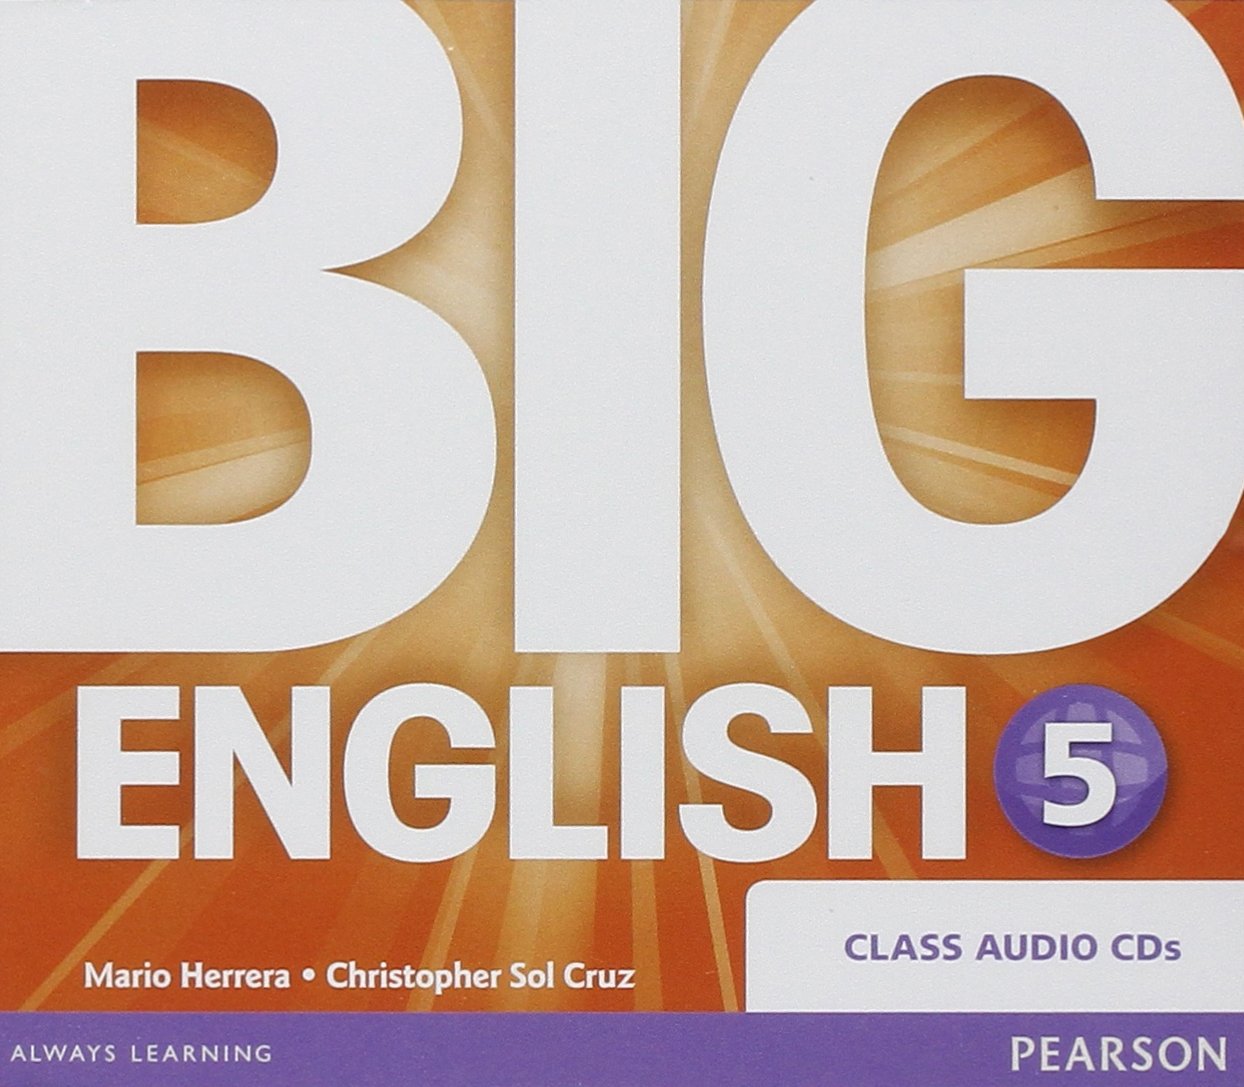 BIG ENGLISH 5 Class Audio CD